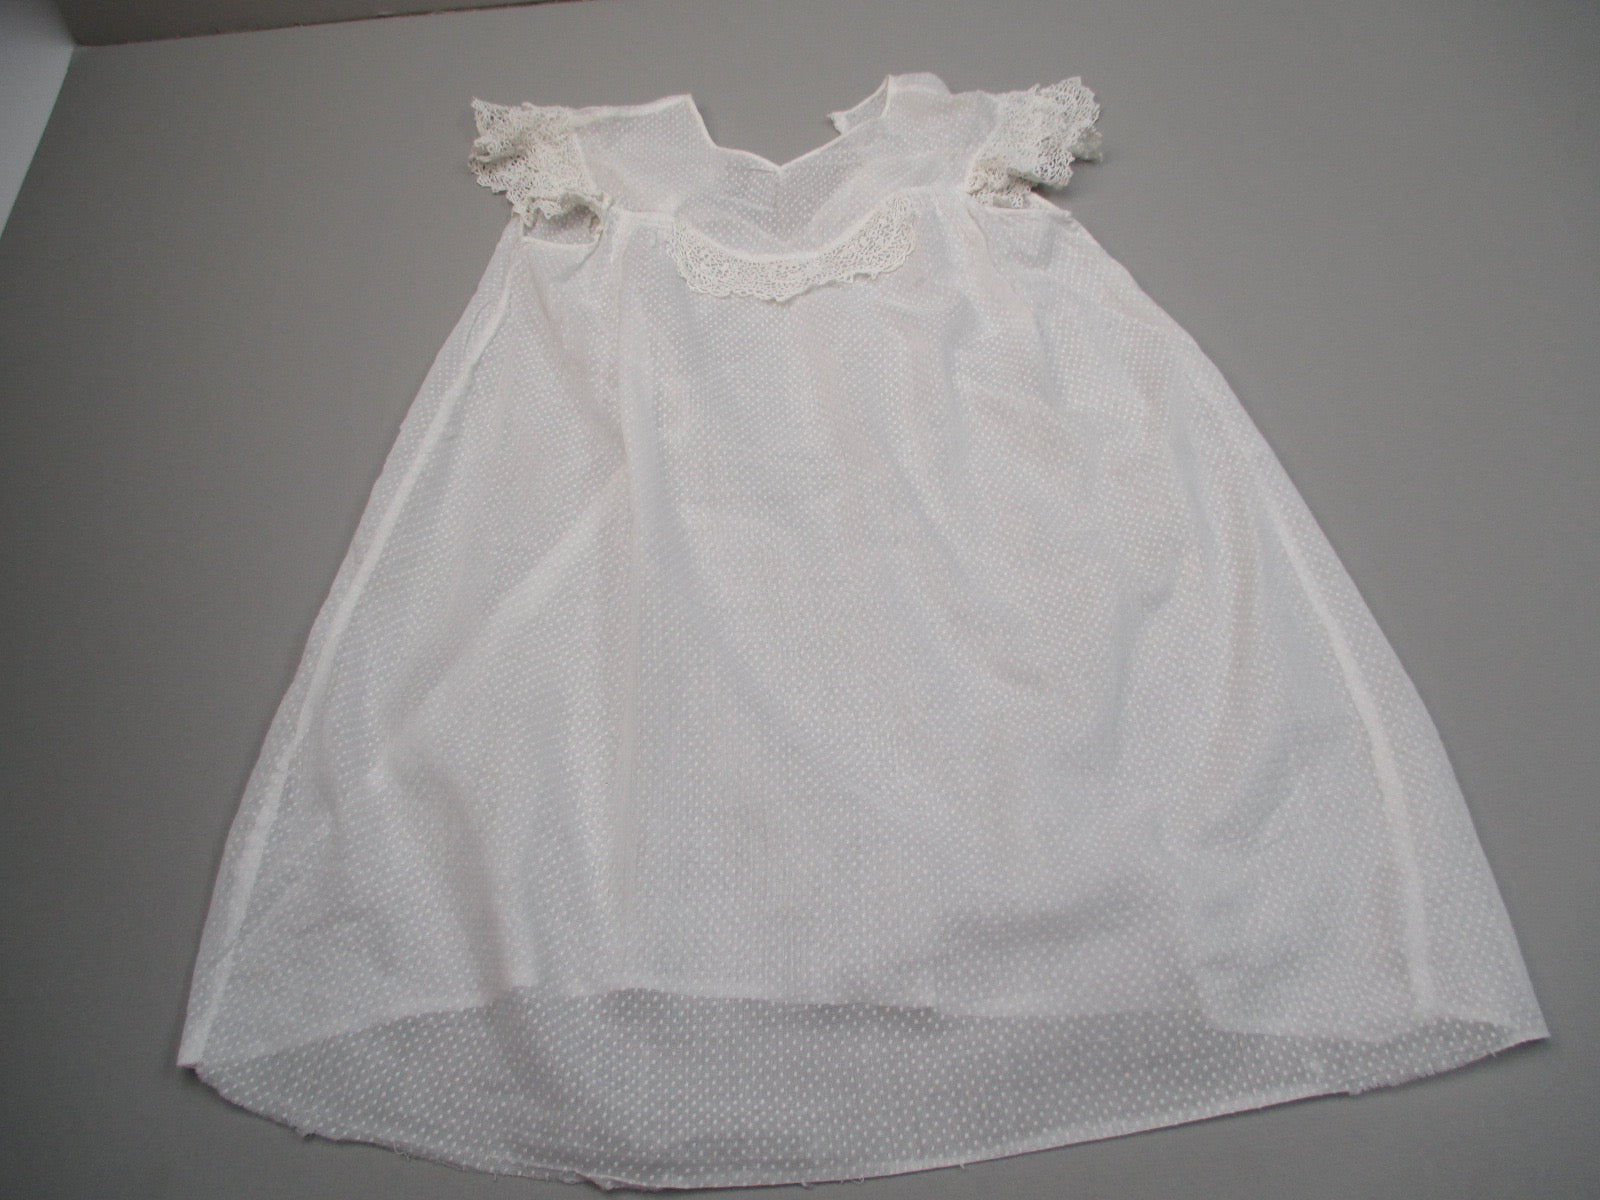 Antique Victorian Baby gown